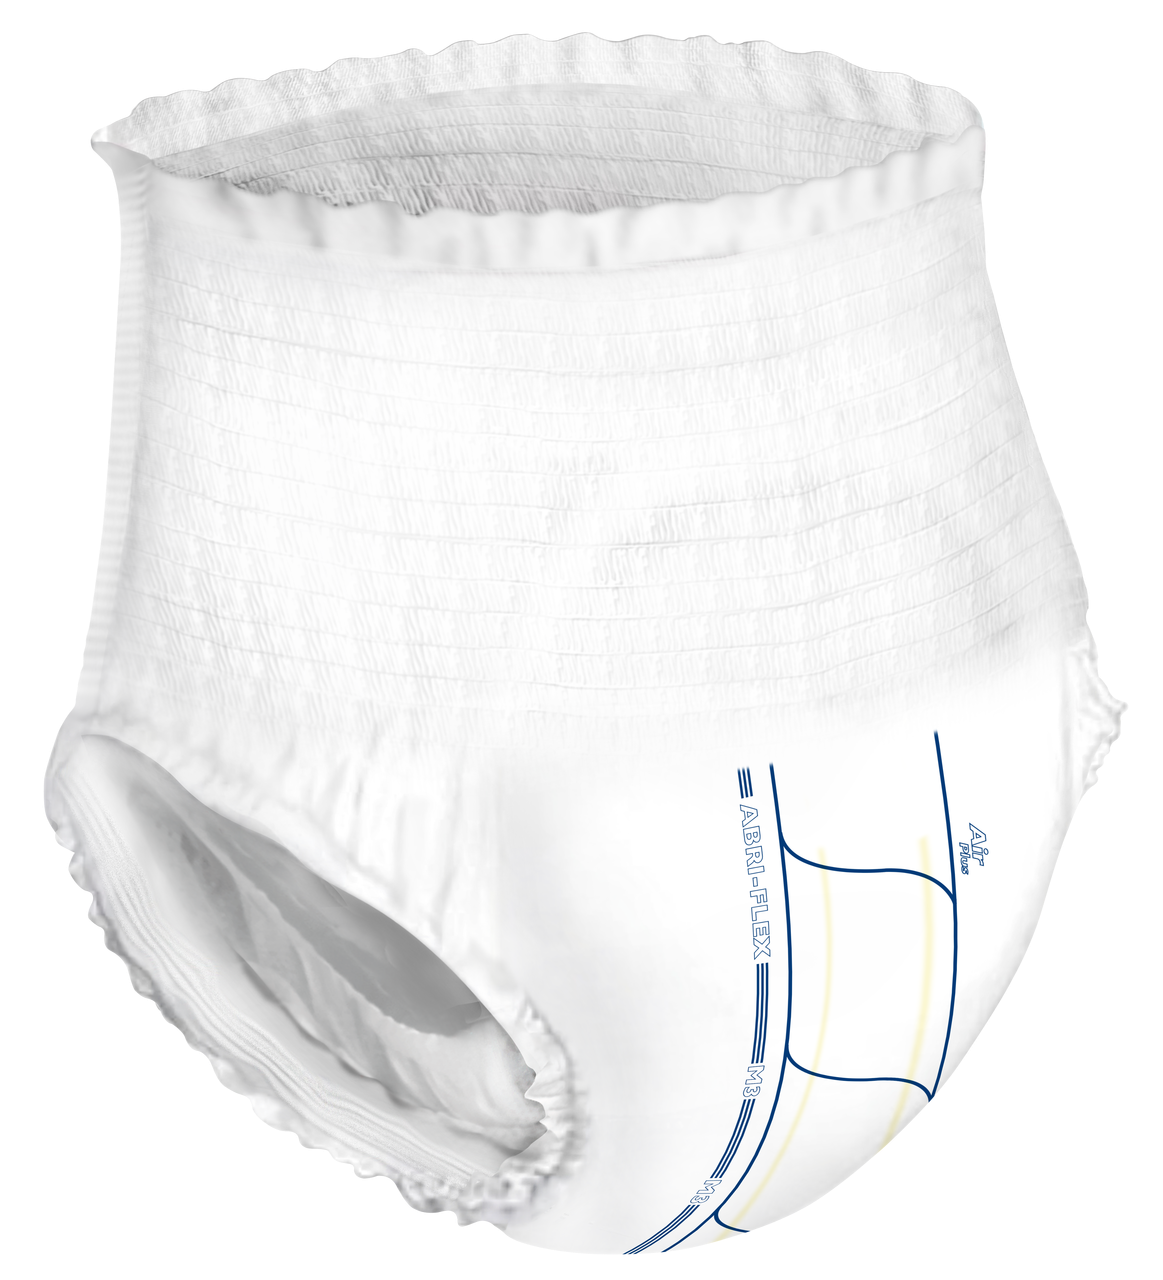 Abena Abri-Flex Pull-Up Underwear, 3 Ultra Heavy